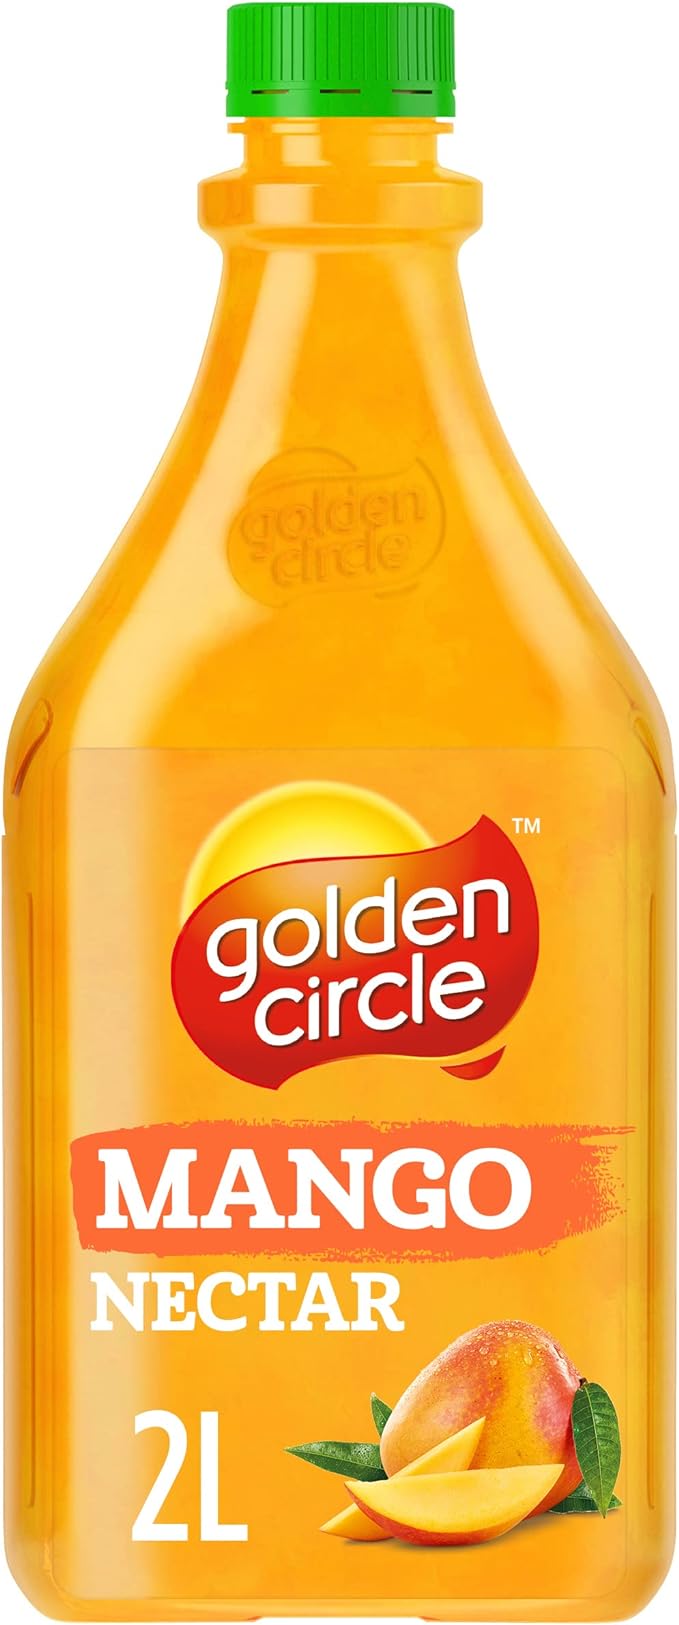 Mango Nectar 2L Bottle Golden Circle (D)